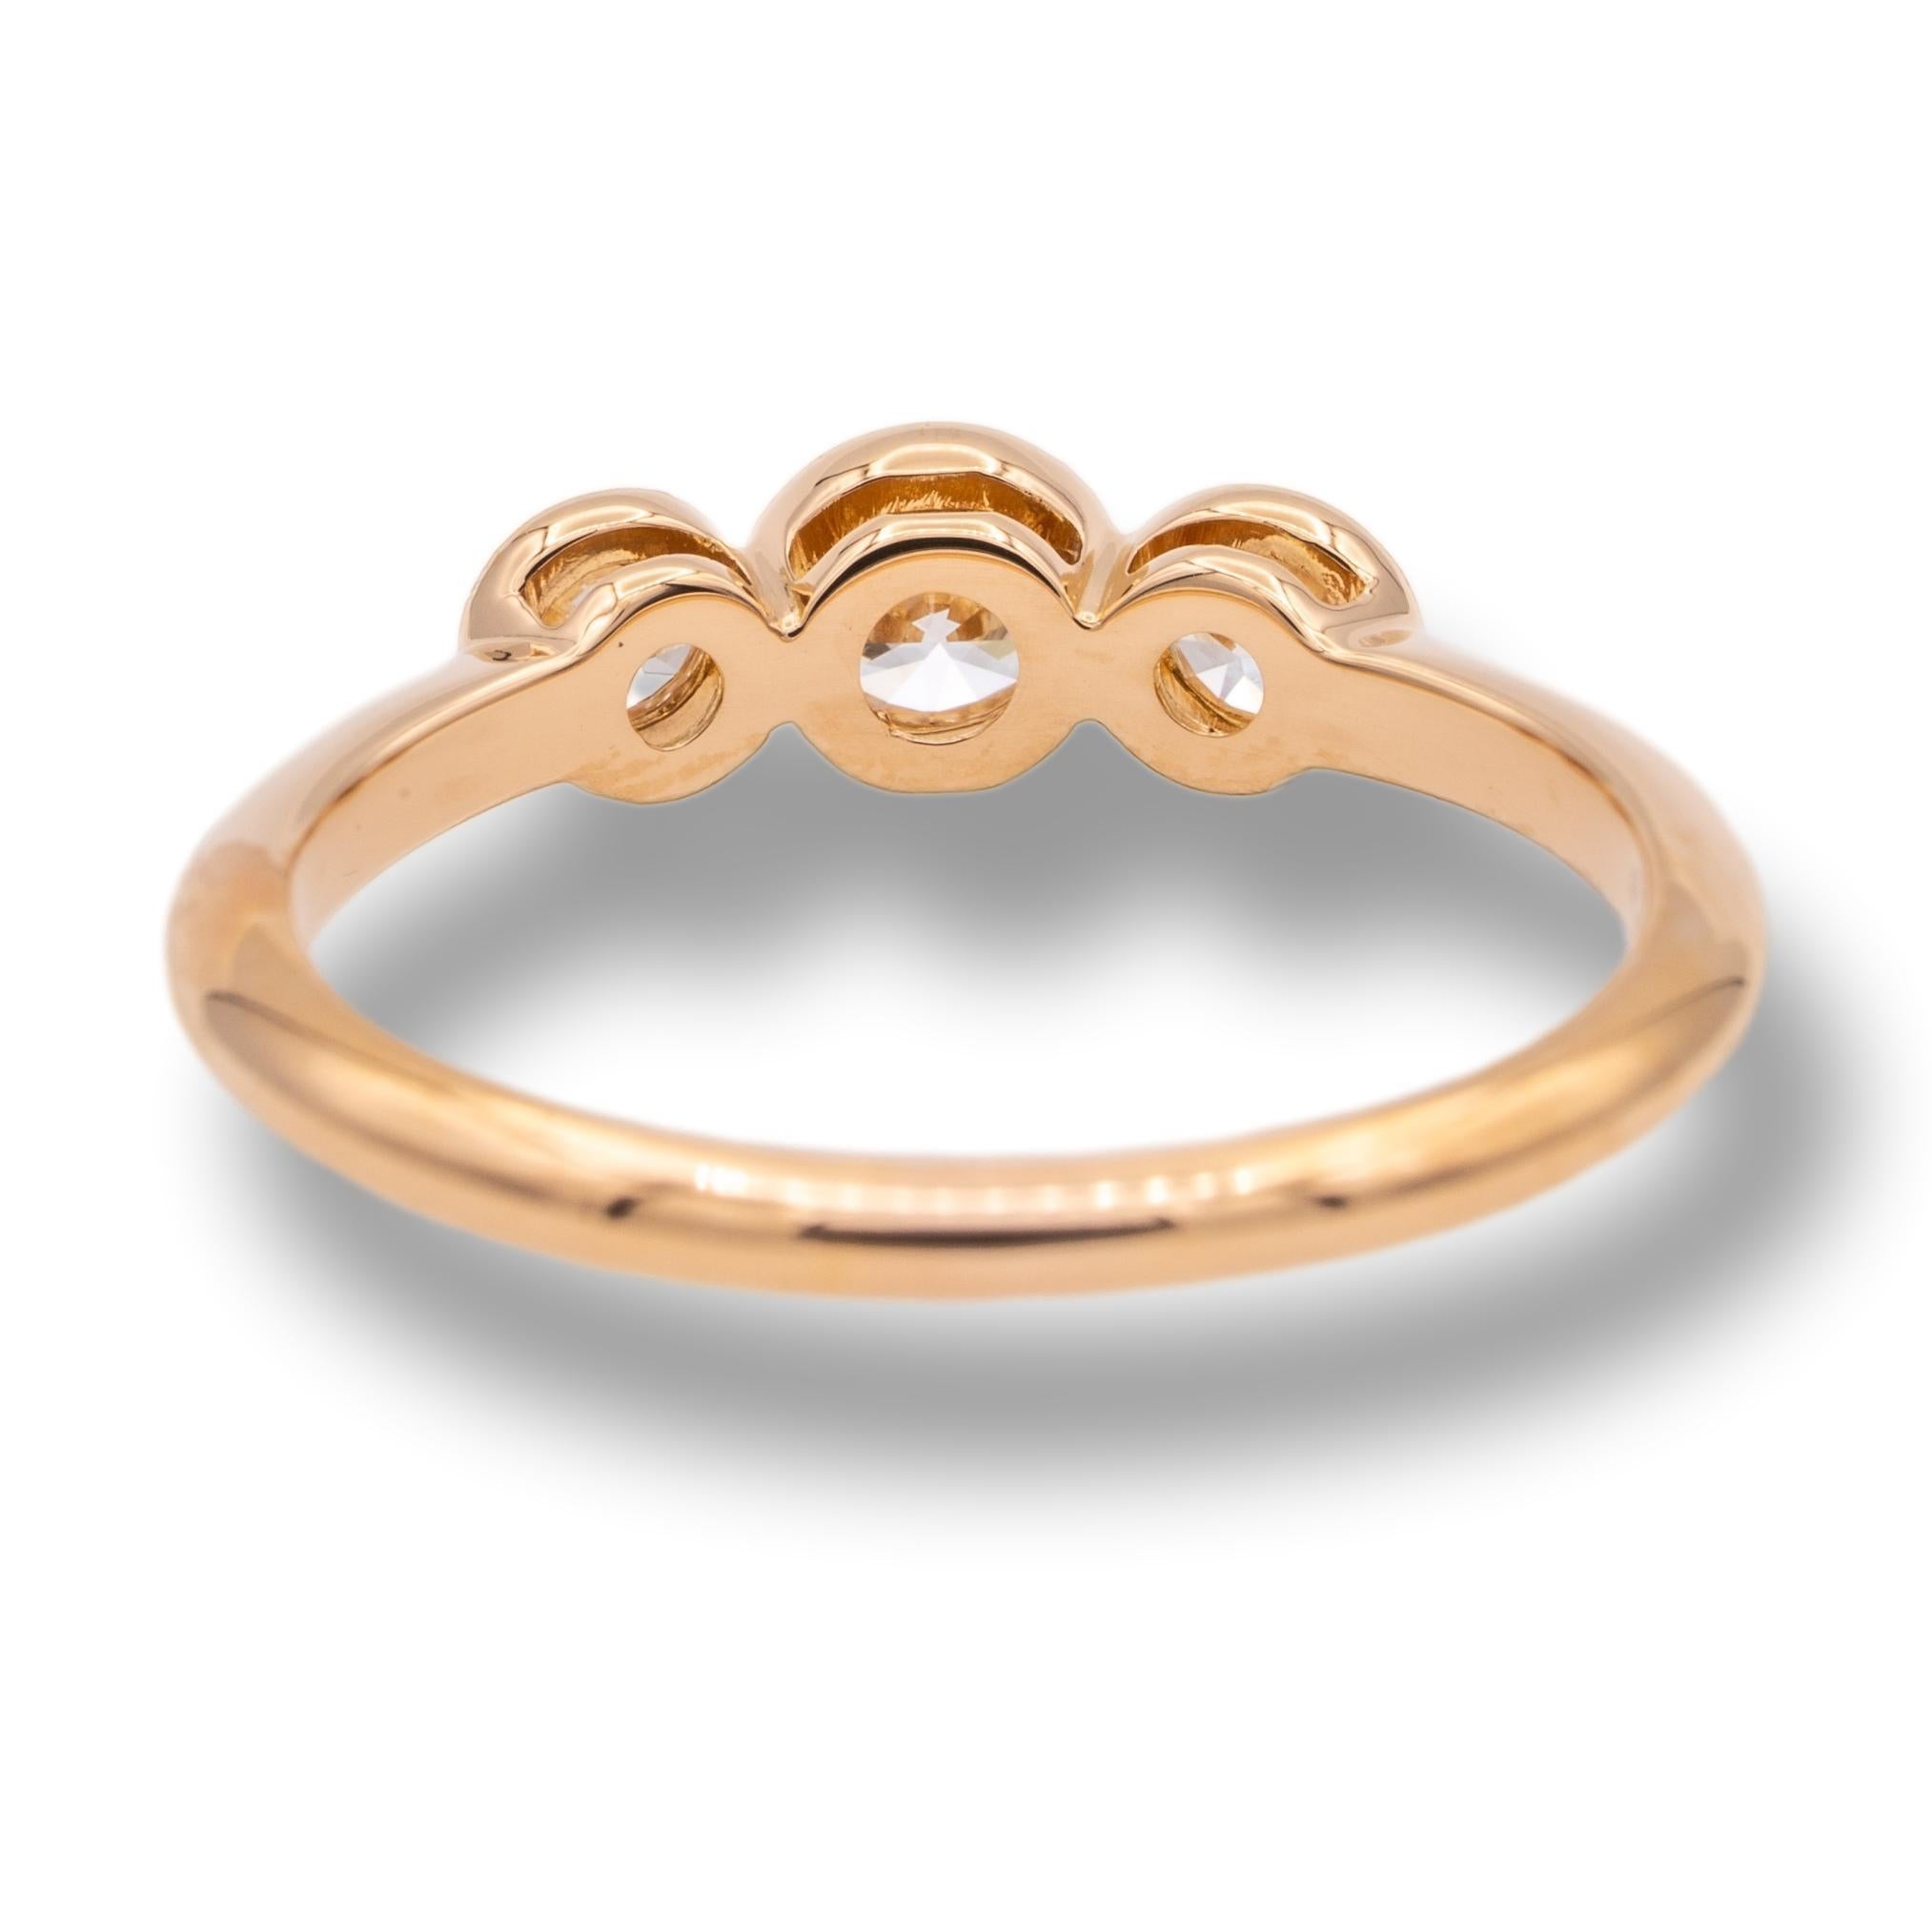 Round Cut Tiffany & Co. 3 Stone 18K Rose Gold Bezels Diamond Ring 0.29 Cts. Total GVVS2